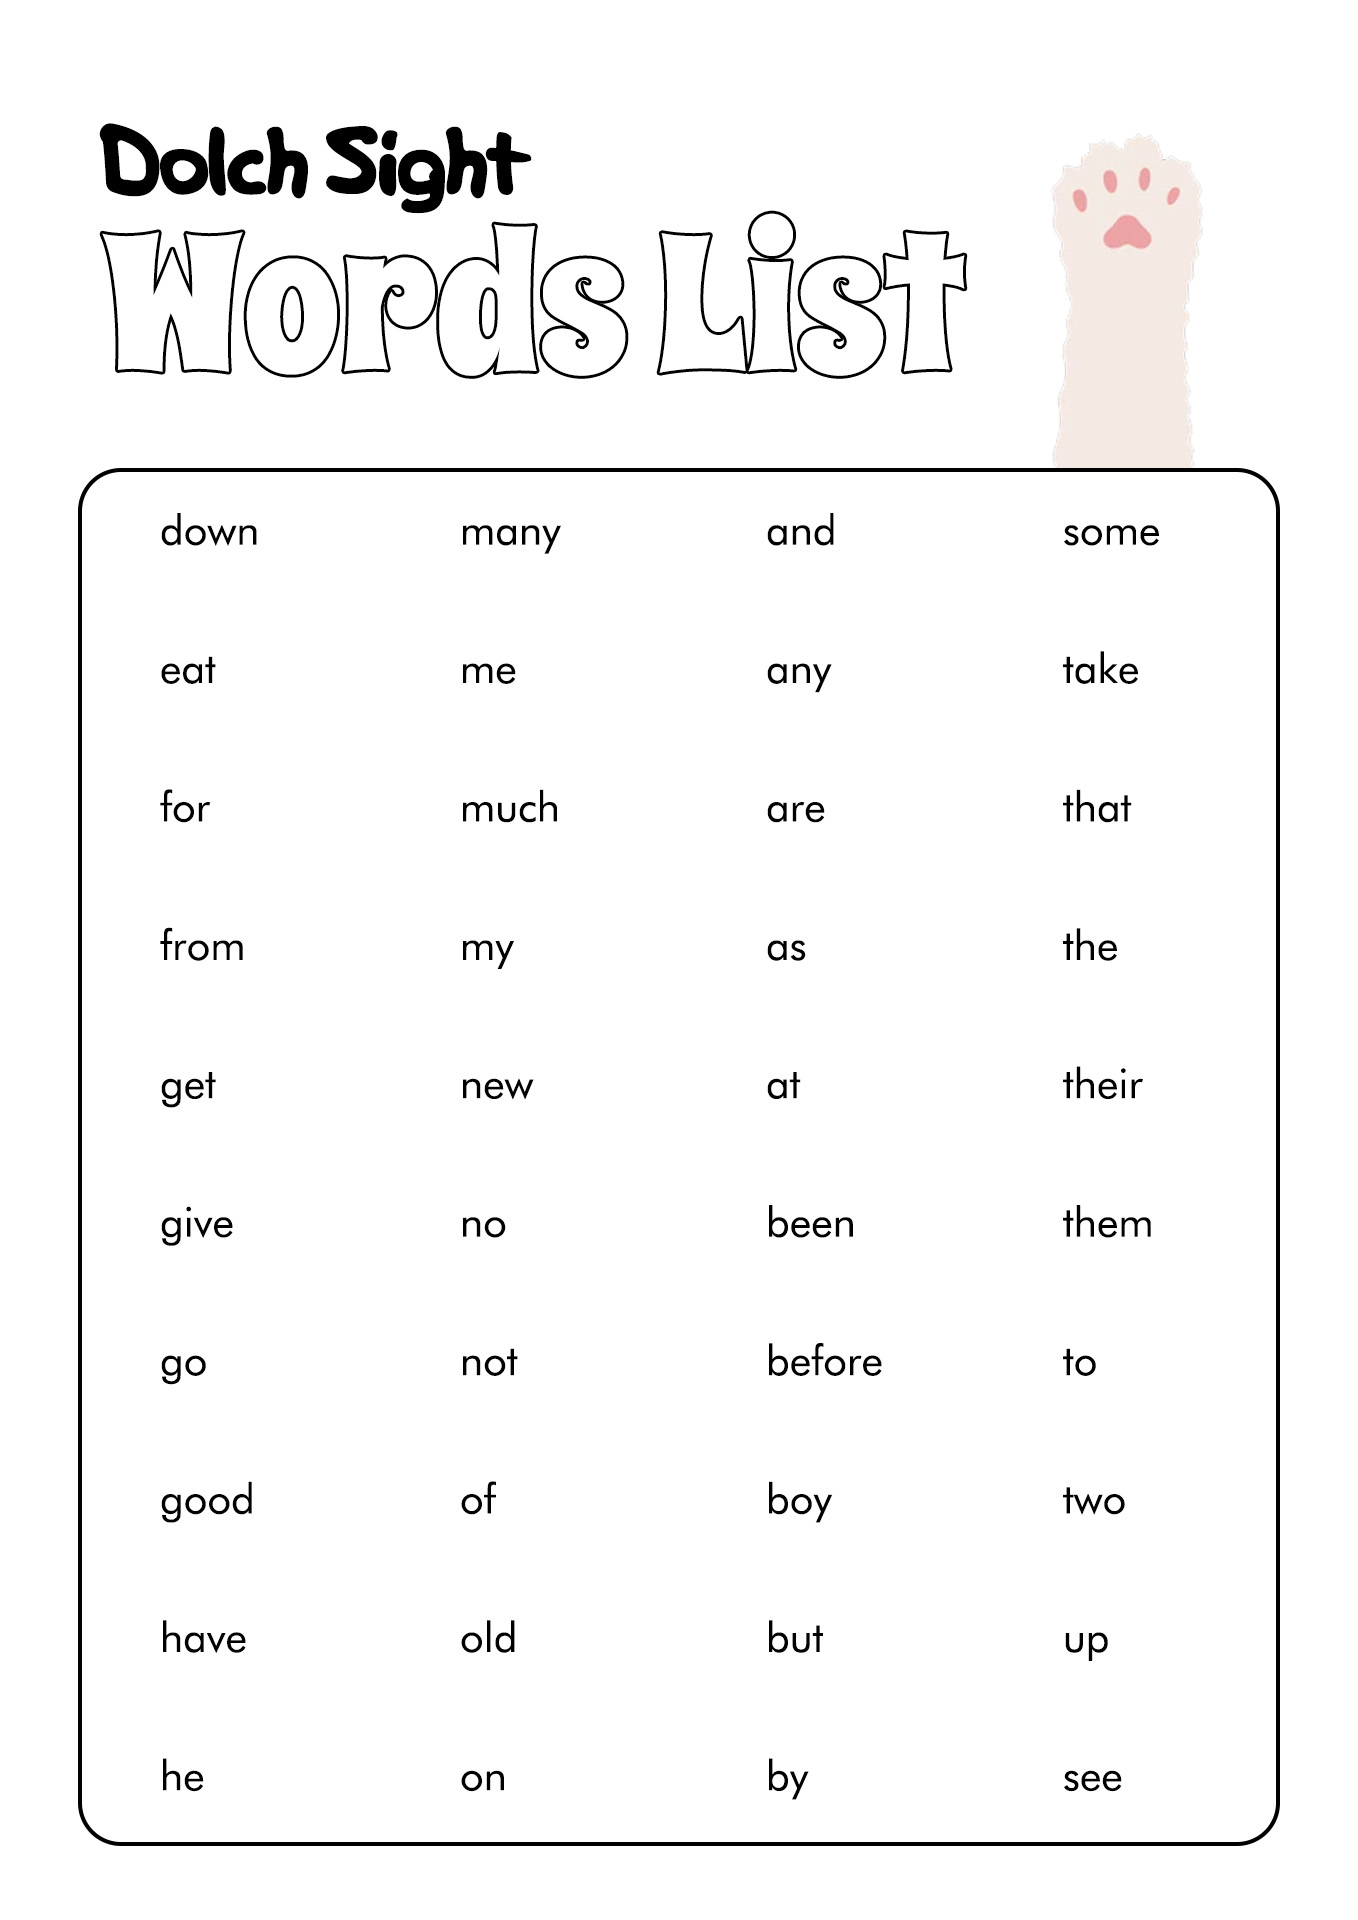 Kindergarten Dolch Word List Printable Image